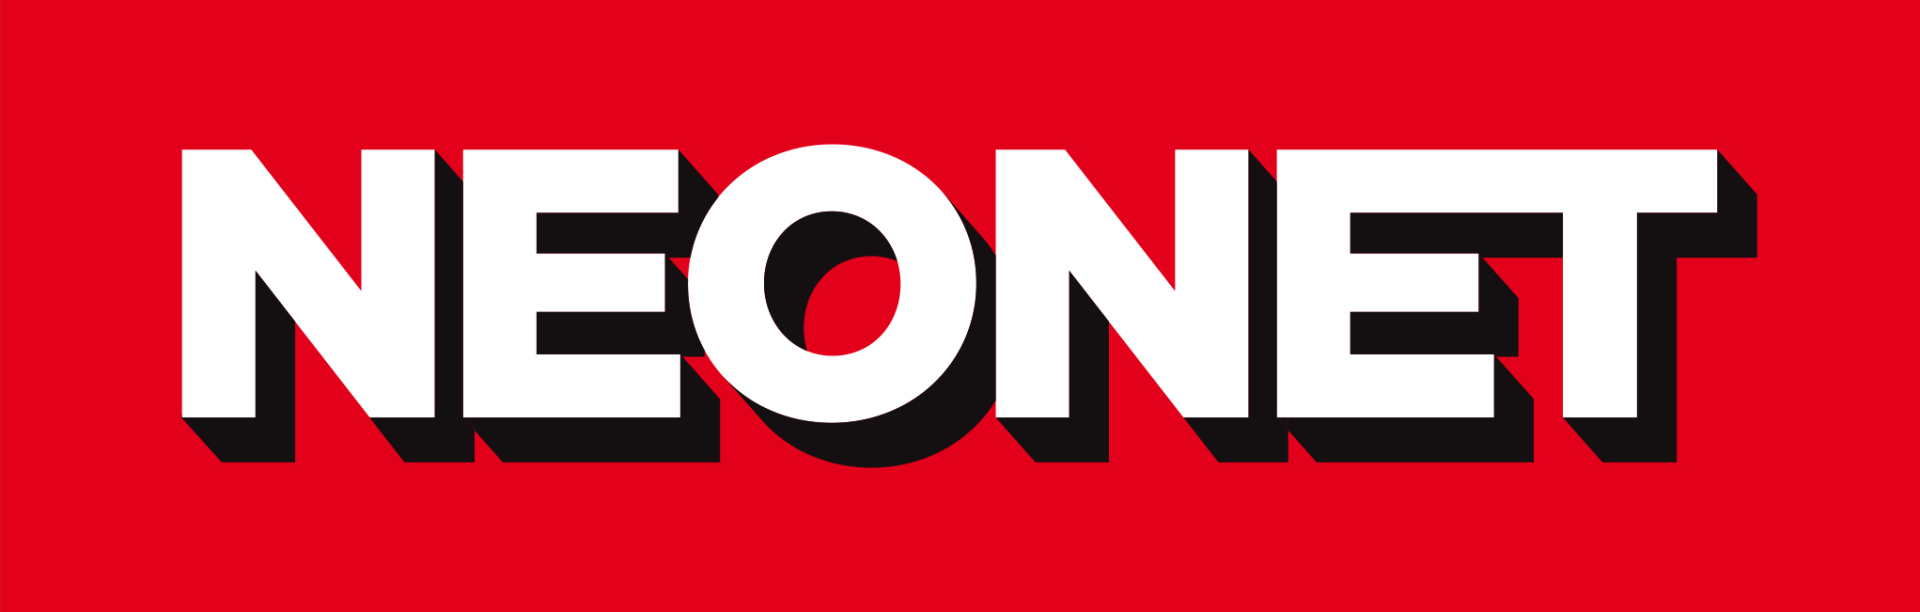 NEONET logo